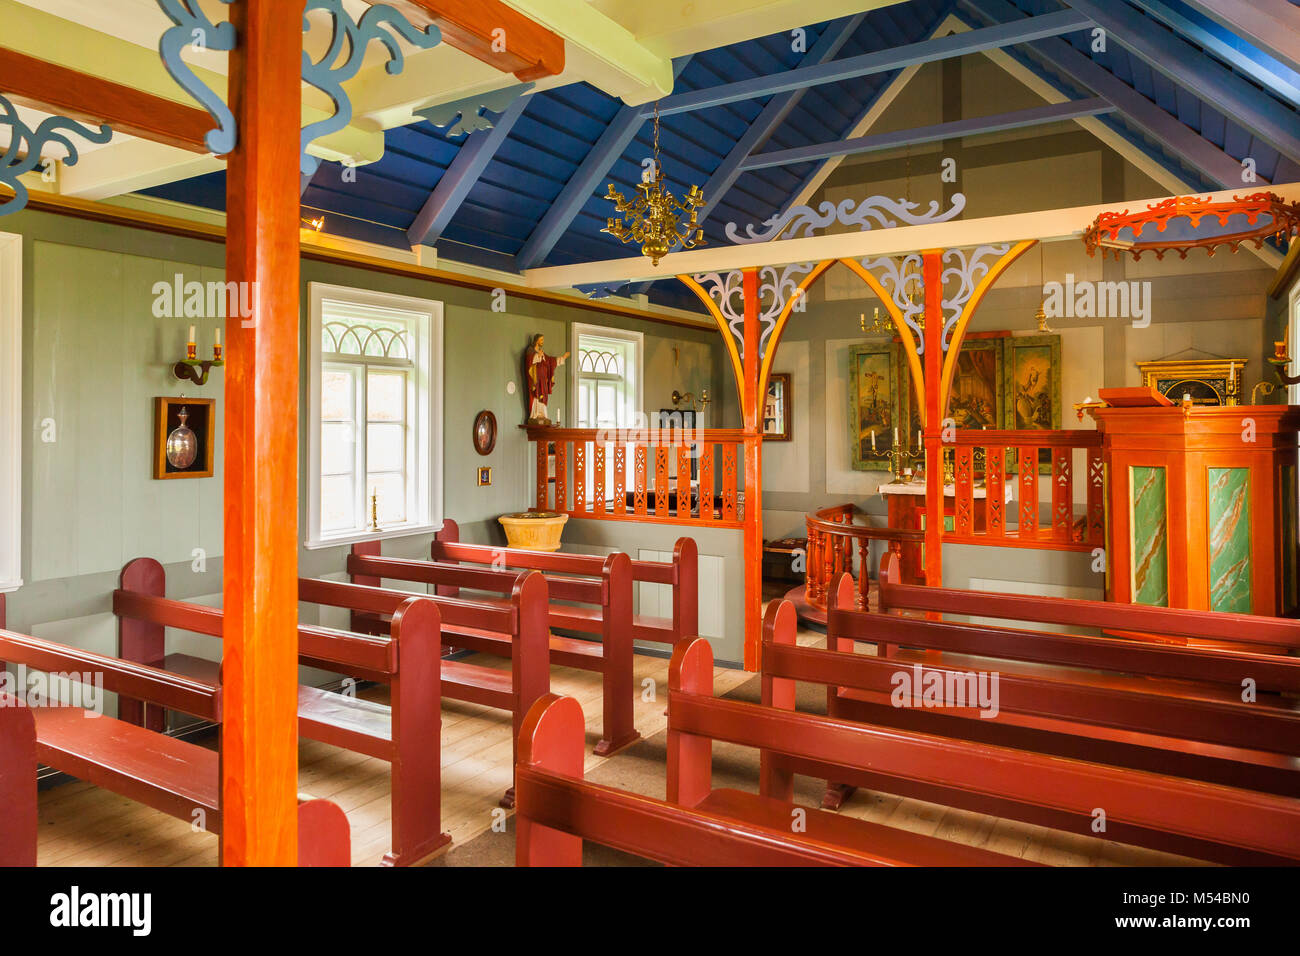 iceland skogar museum church interiors Stock Photo